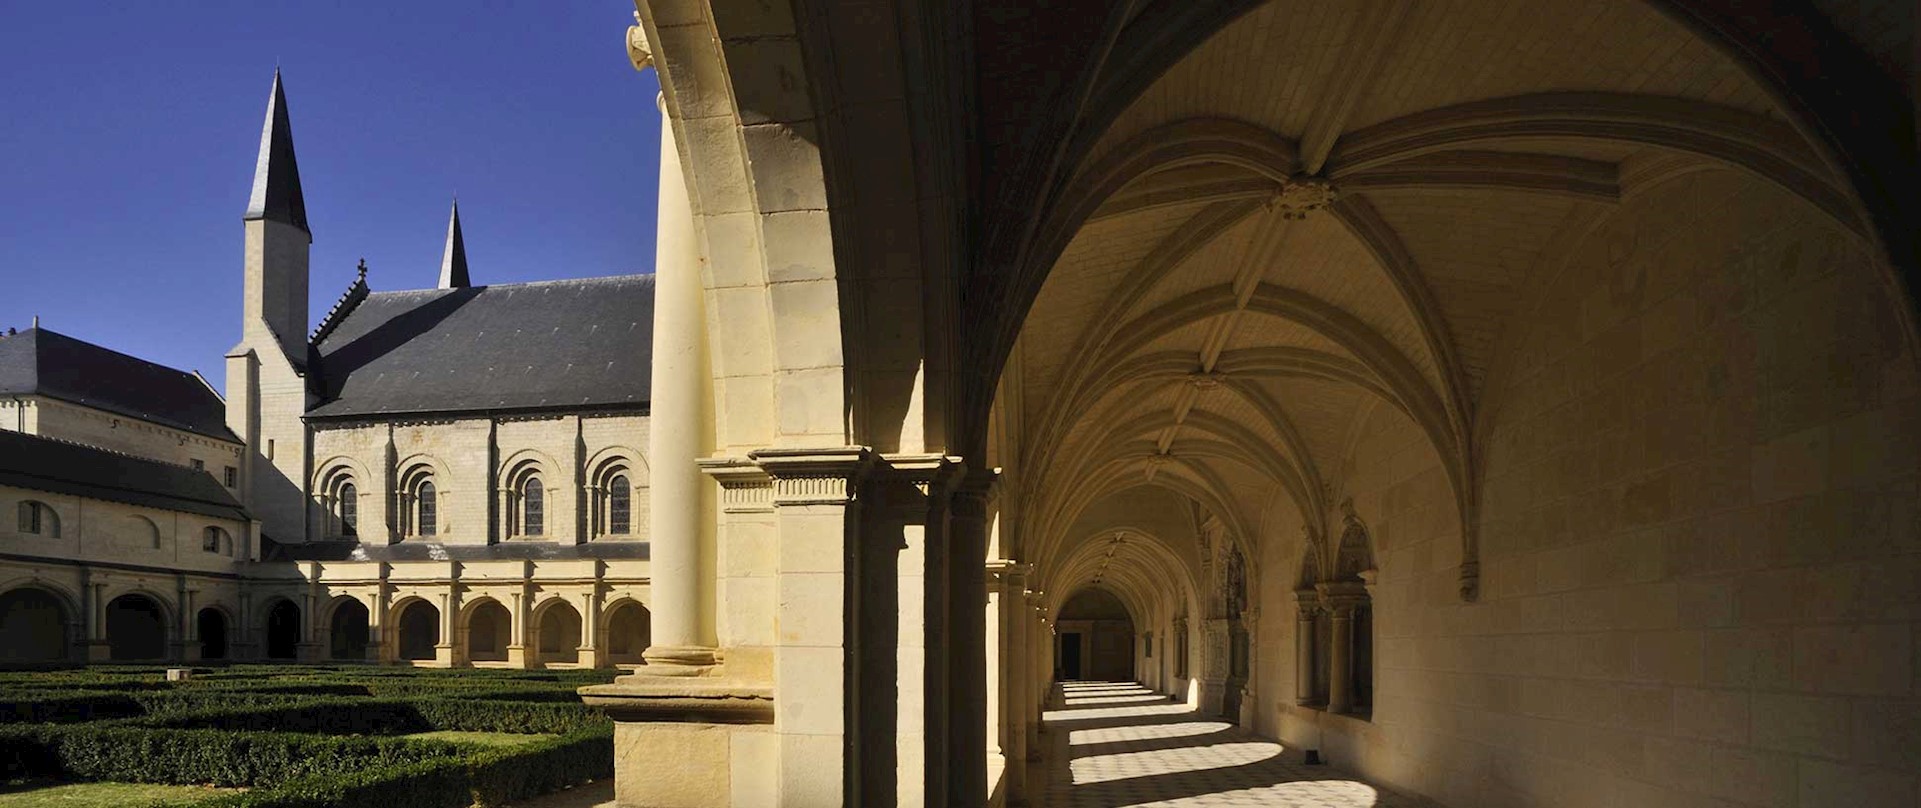 Abbaye de Fontevraud, XIIe-XVIIe siècle. © Philippe BODY / HEMIS 